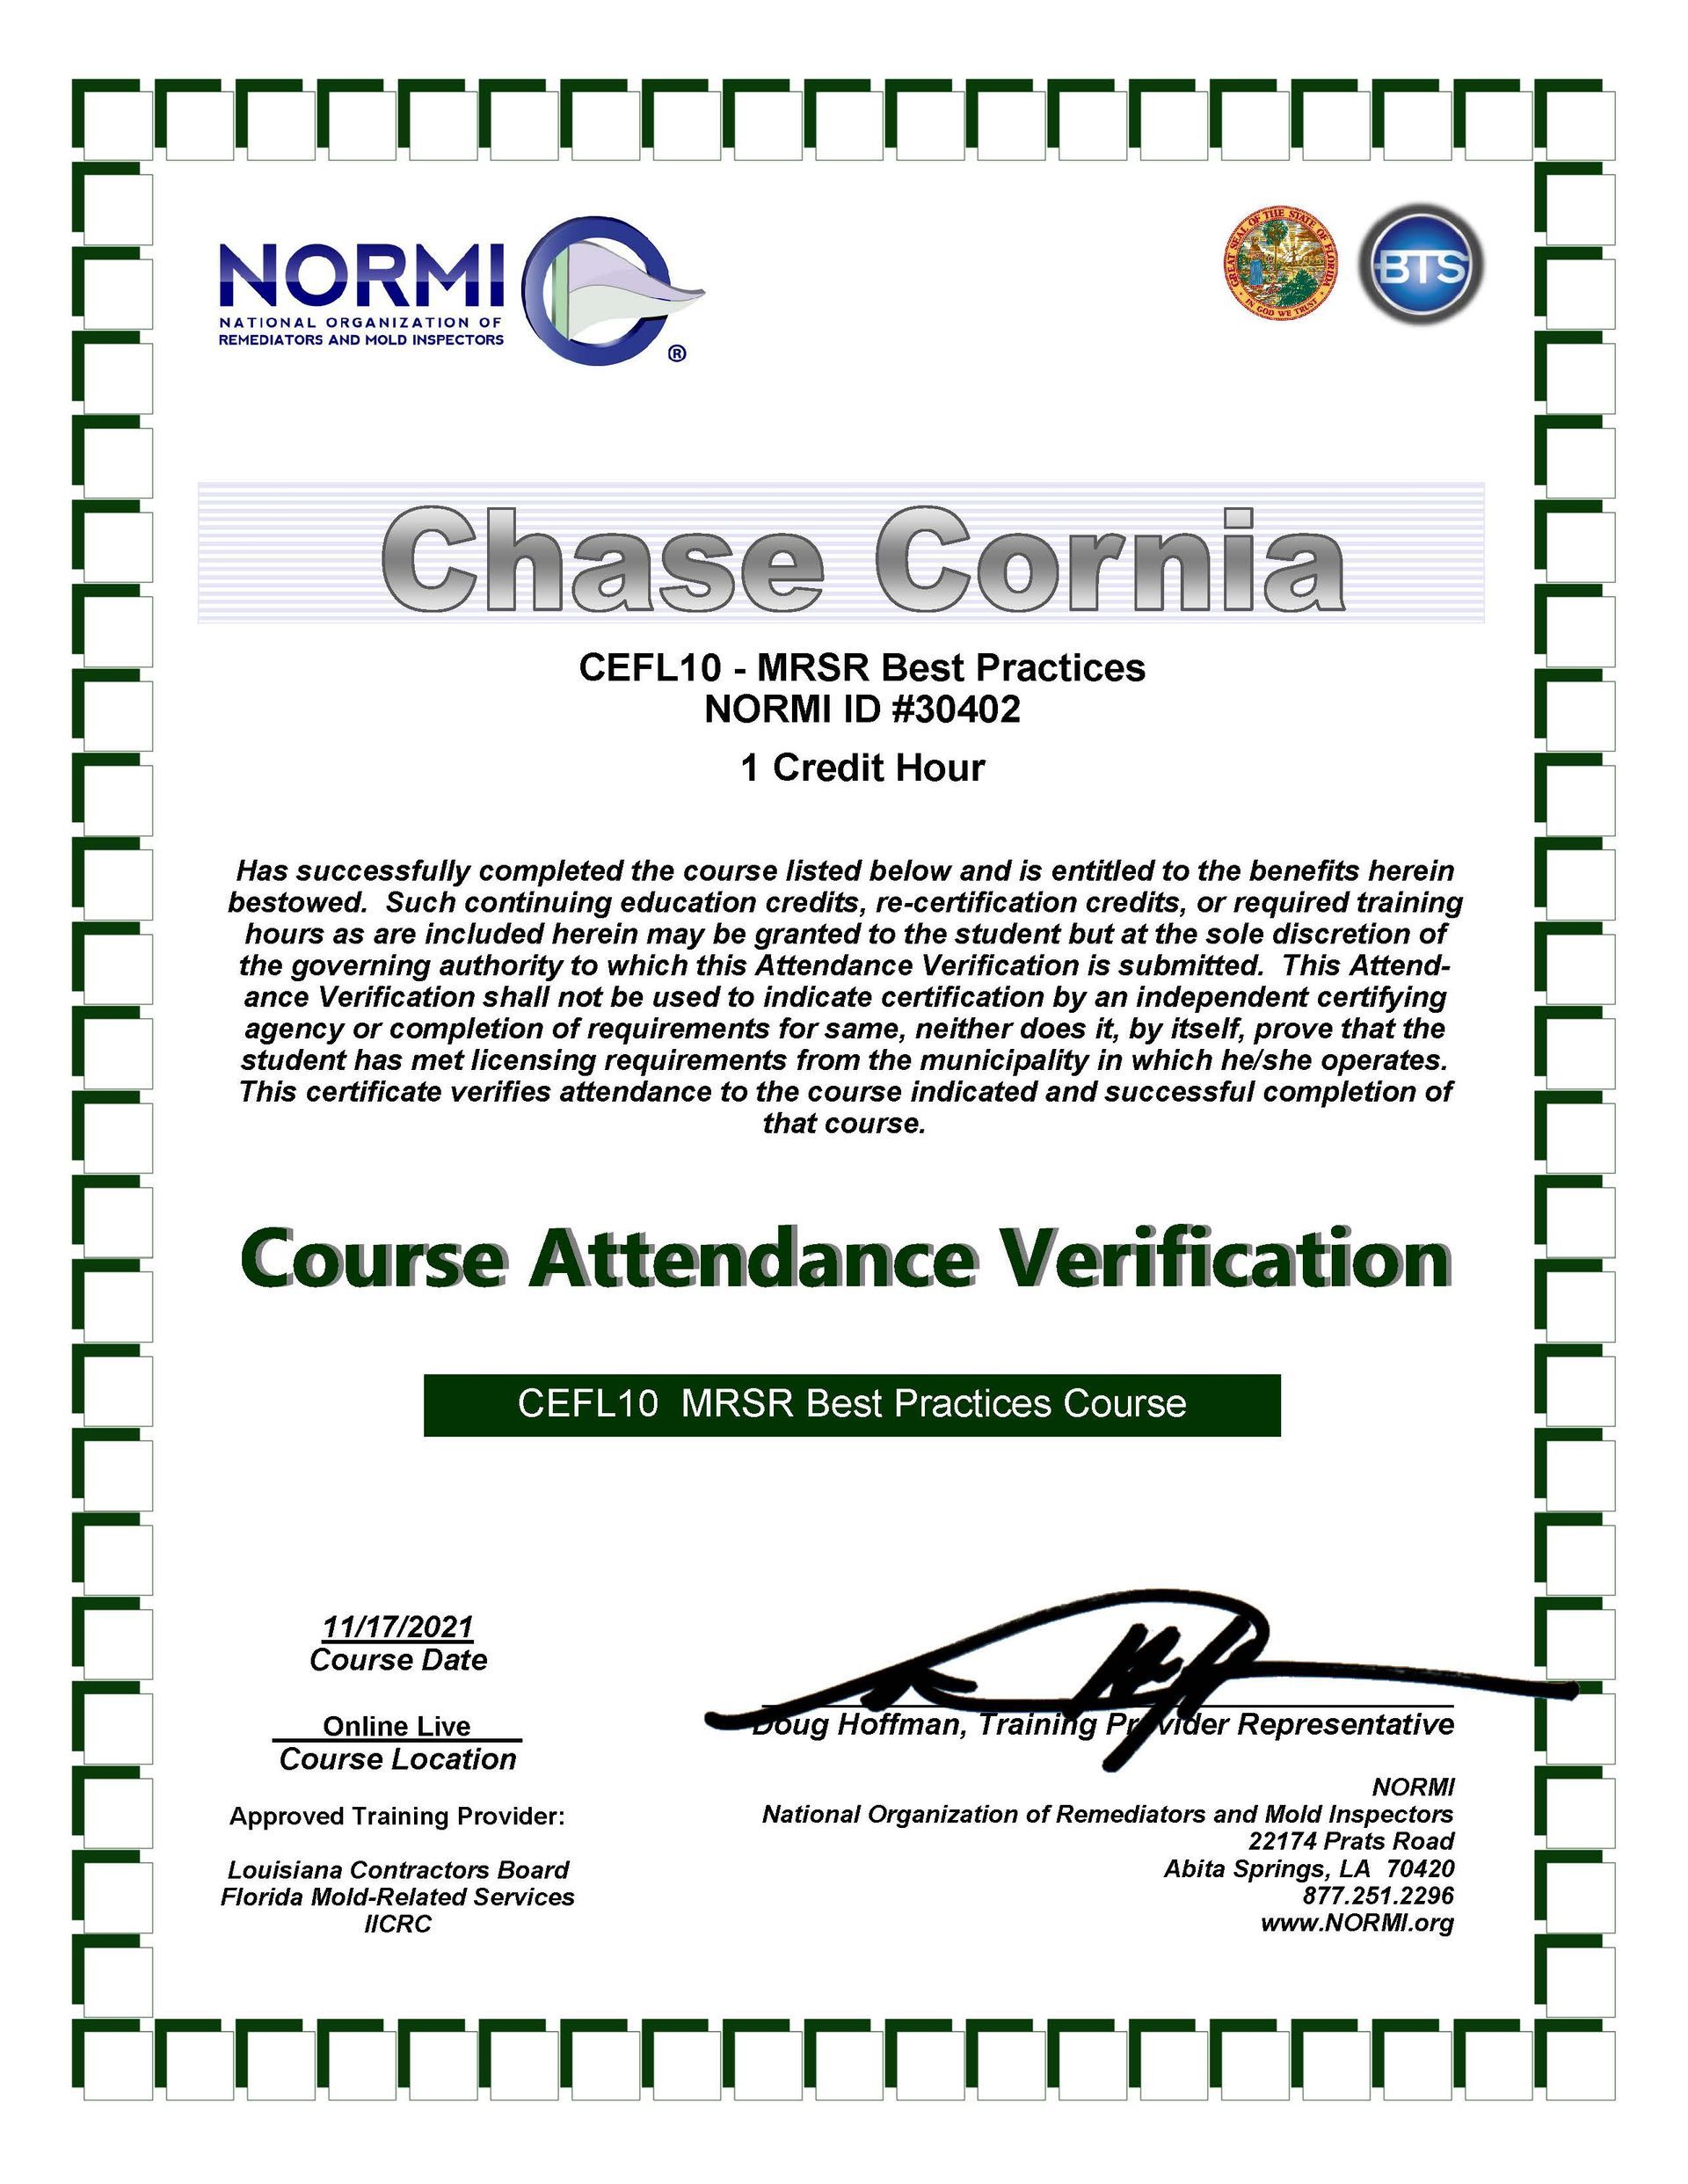 a chase cornia course attendance verification certificate